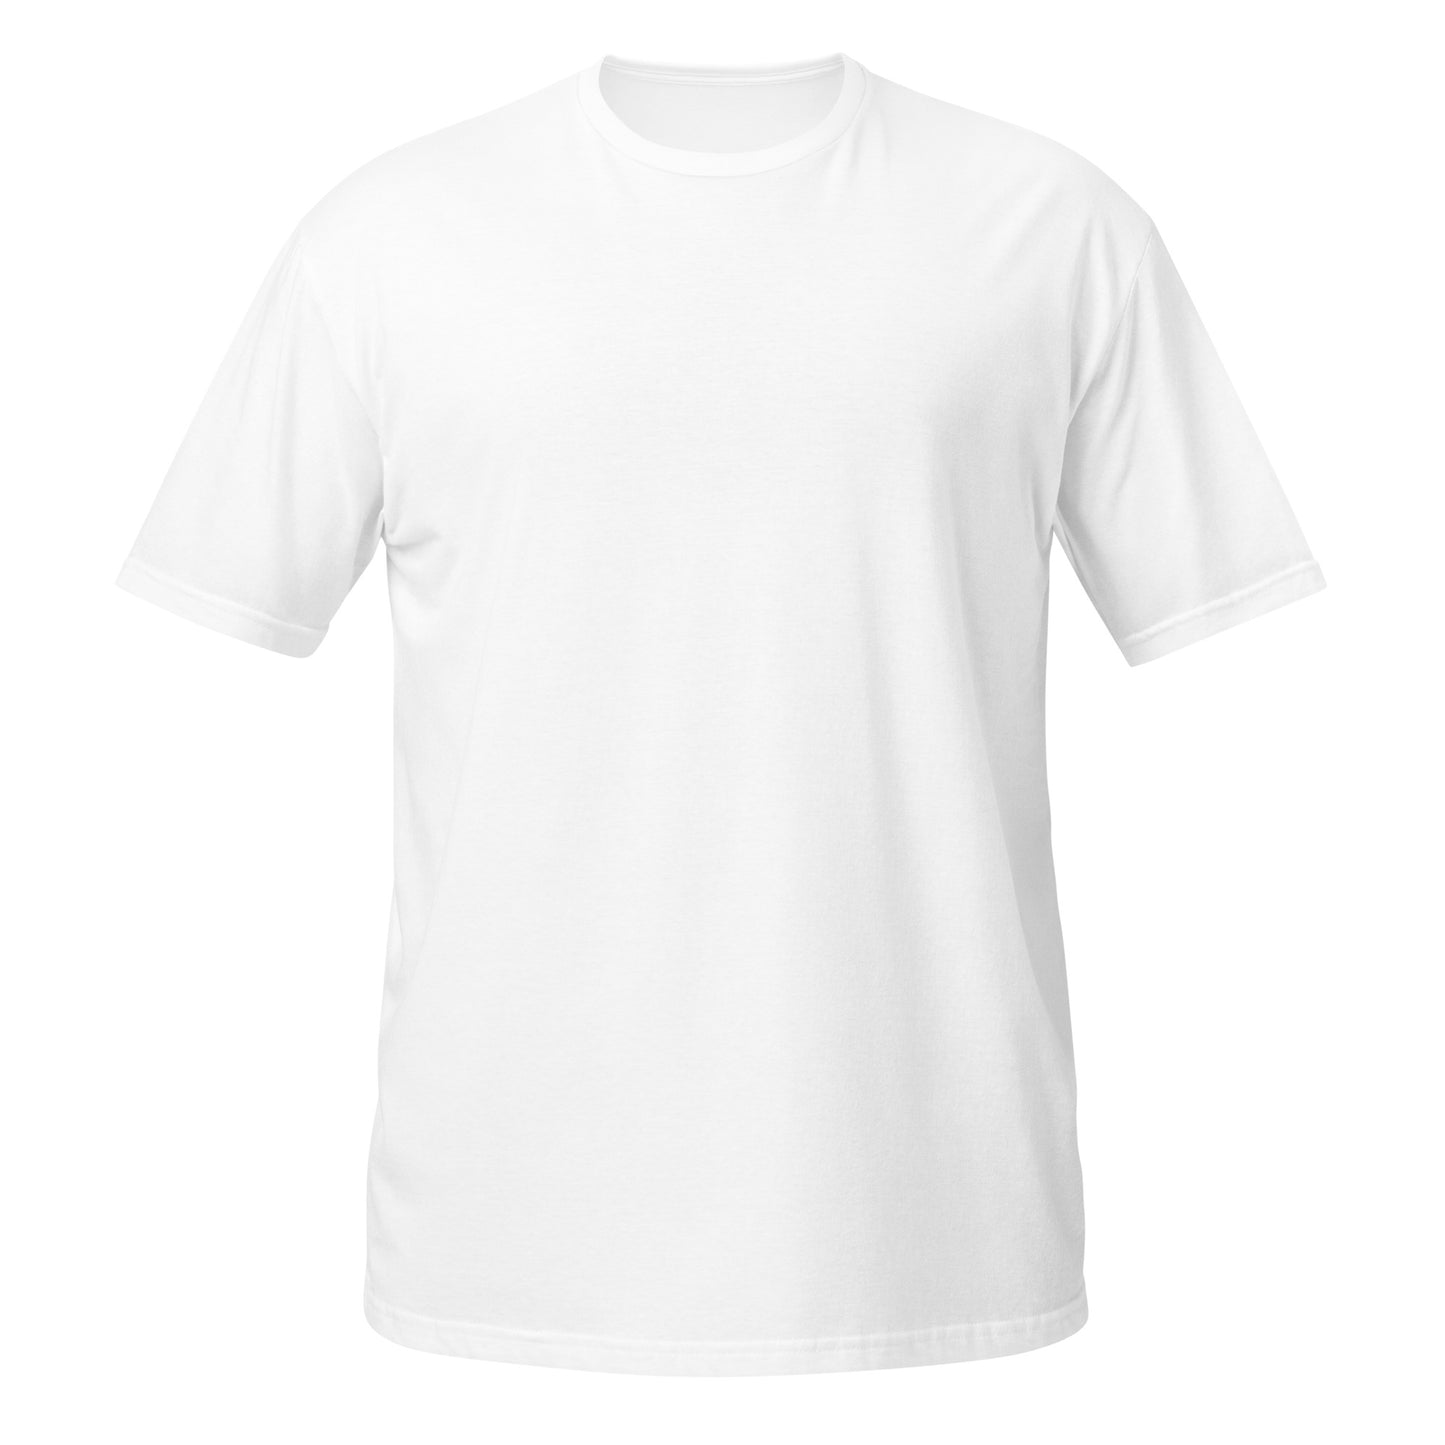 Unisex-T-Shirt „Avanti“.